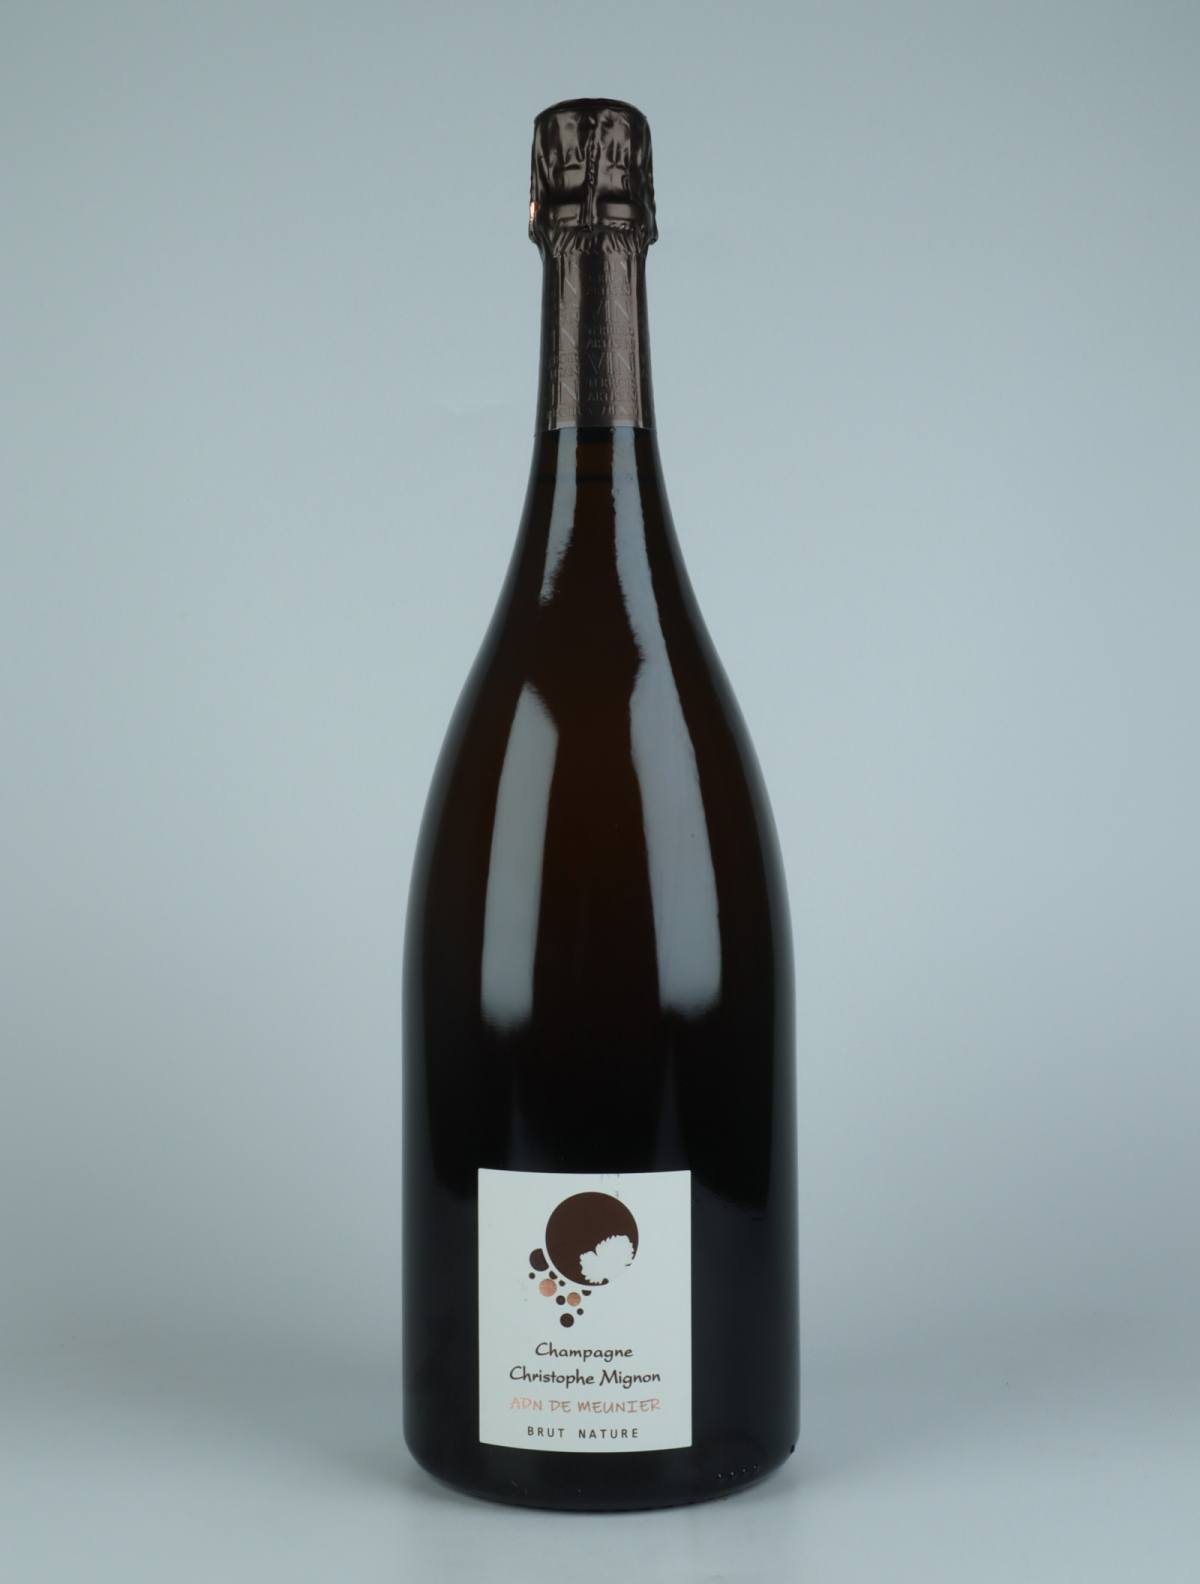 A bottle N.V. (2018/2019) ADN de Meunier Brut Nature - Magnum Sparkling from Christophe Mignon, Champagne in France